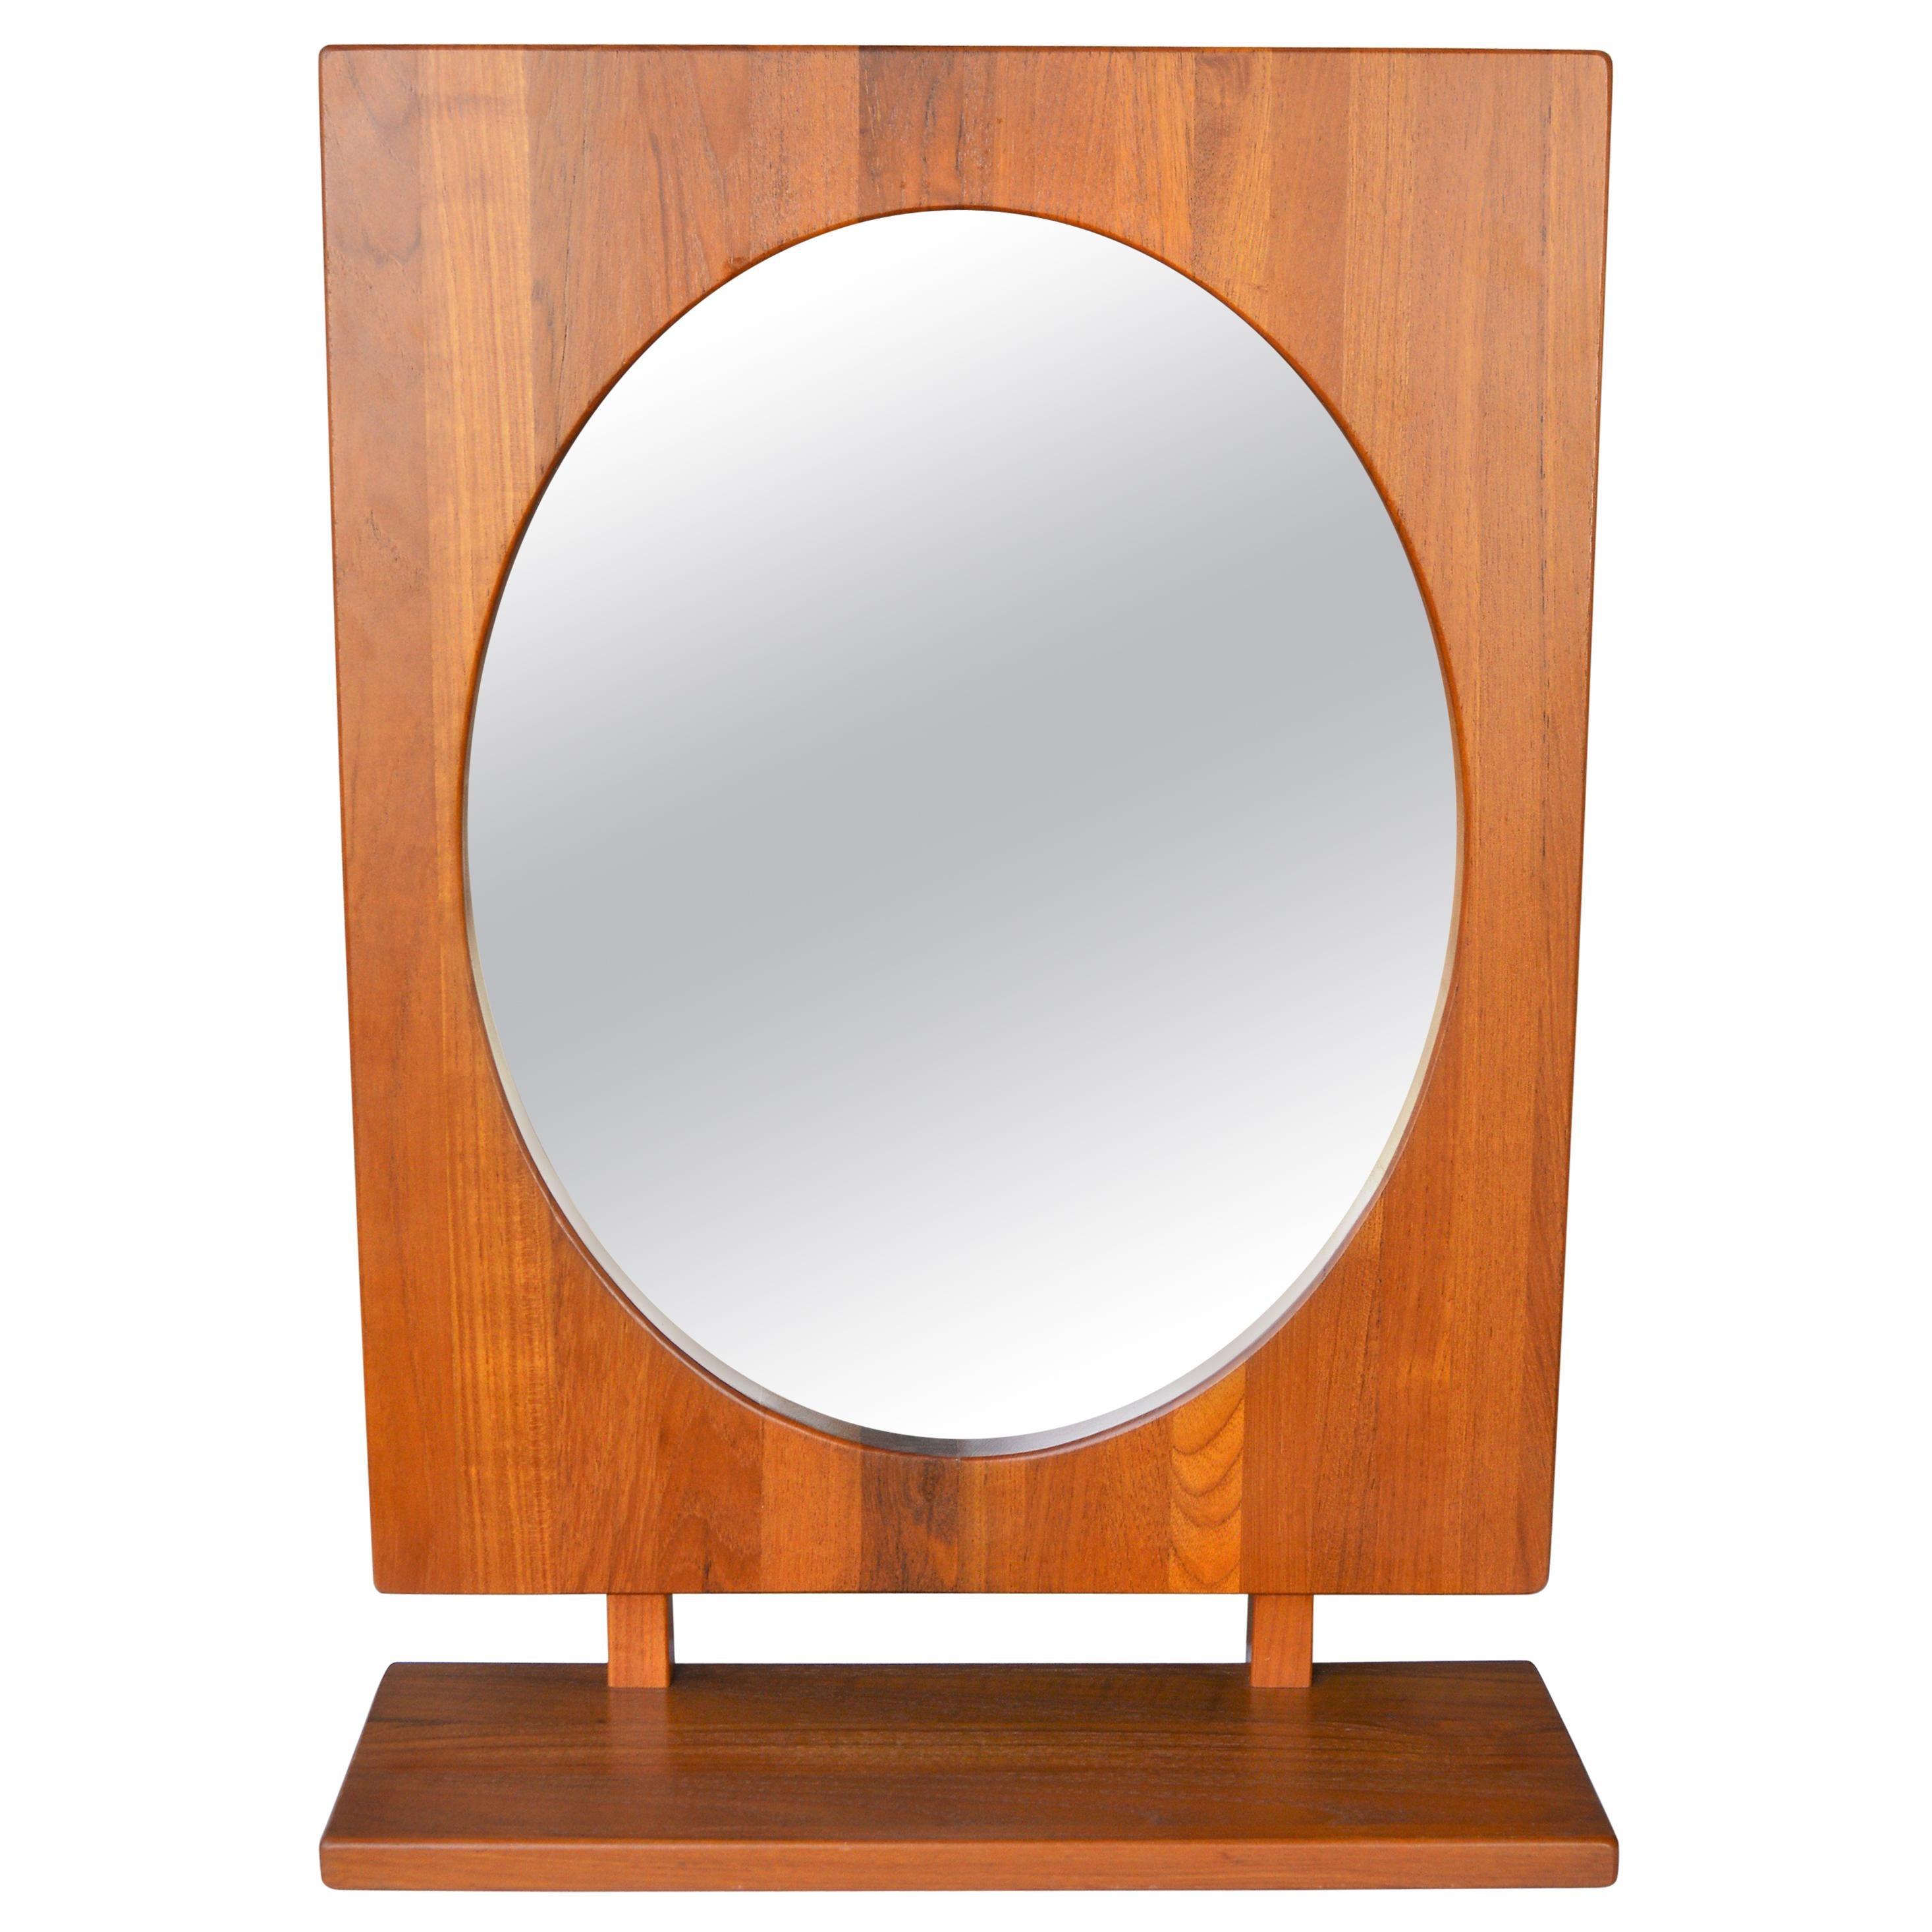 Solid Teak Table or Wall Mirror with Shelf in Oval by Pedersen & Hansen, Denmark For Sale